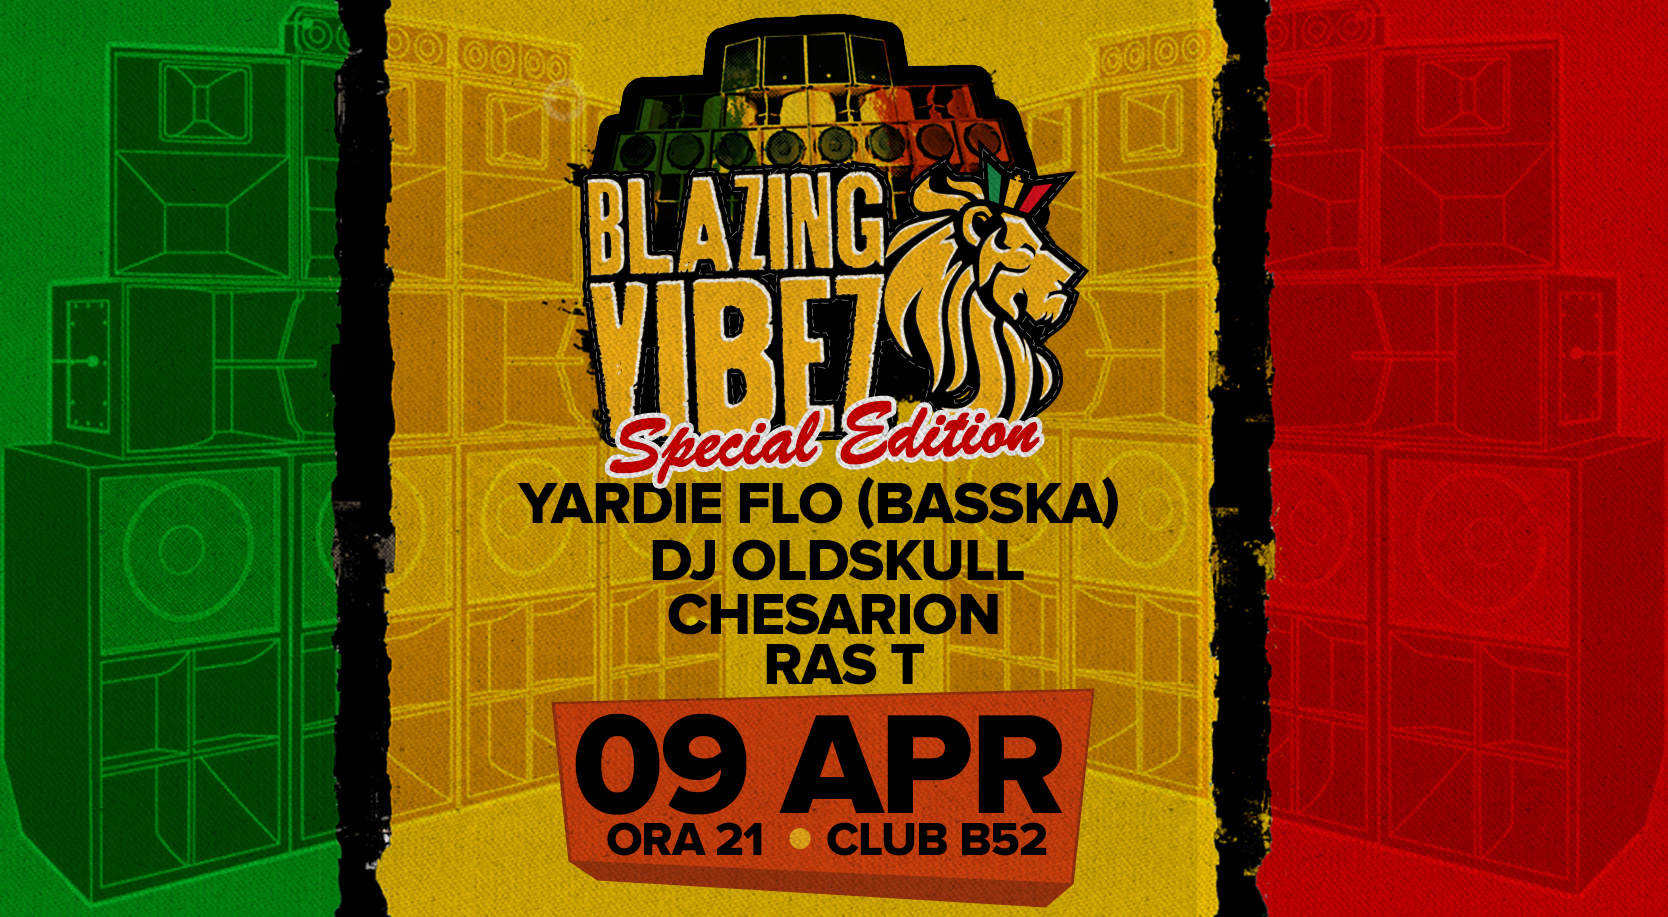 Blazing Vibez Reggae Party - Special Showcase Edition